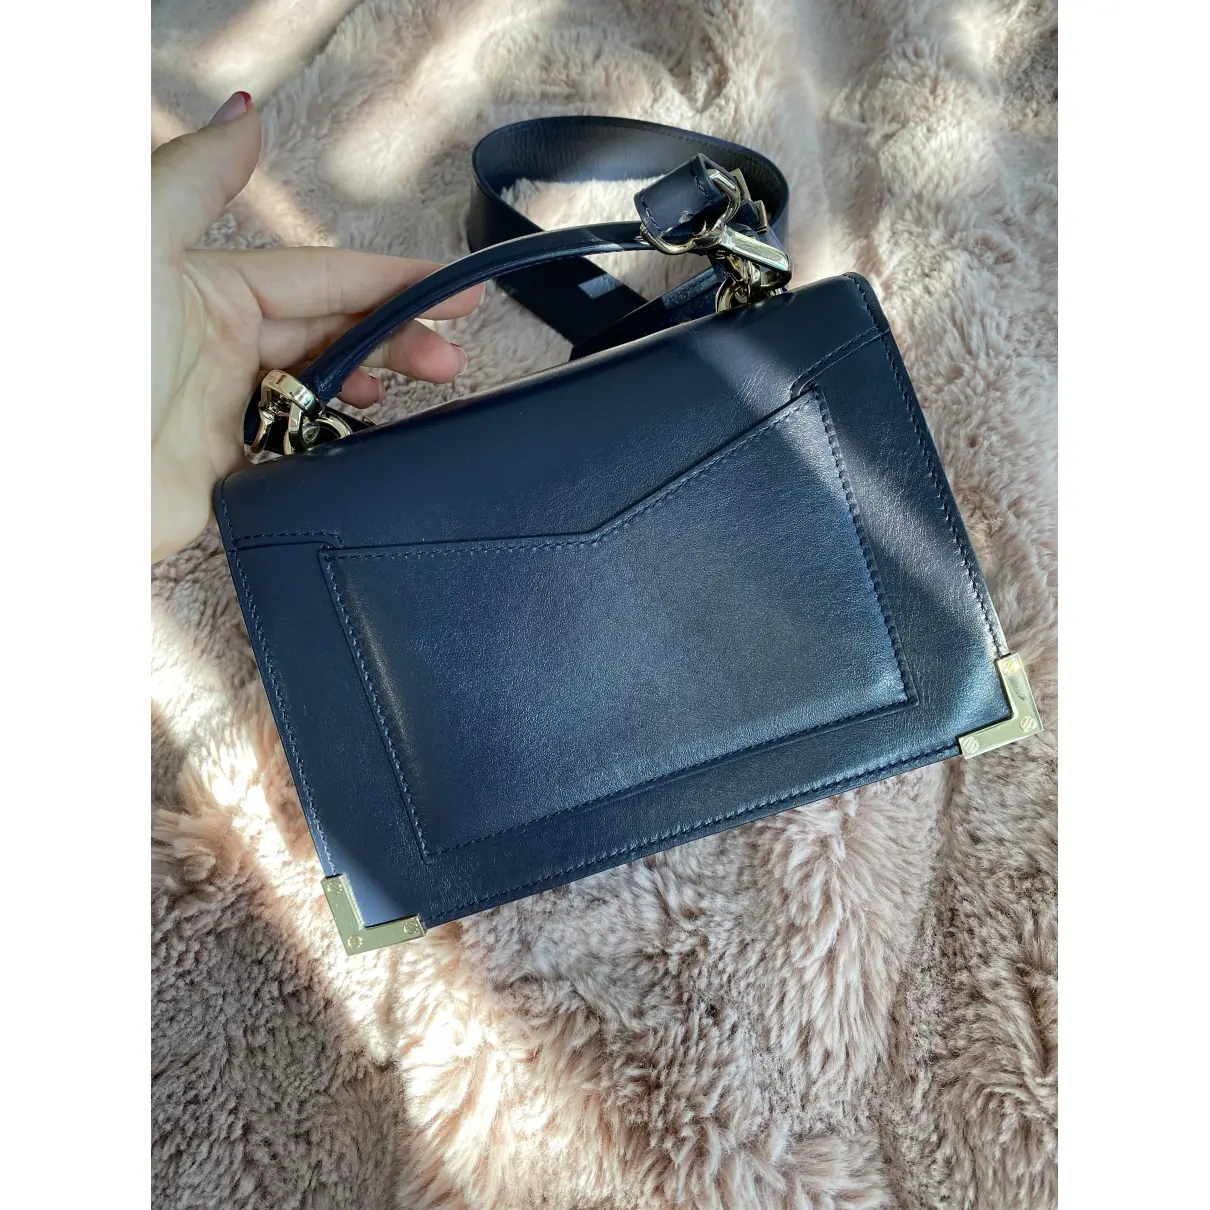 Buy The Kooples Emily leather crossbody bag online